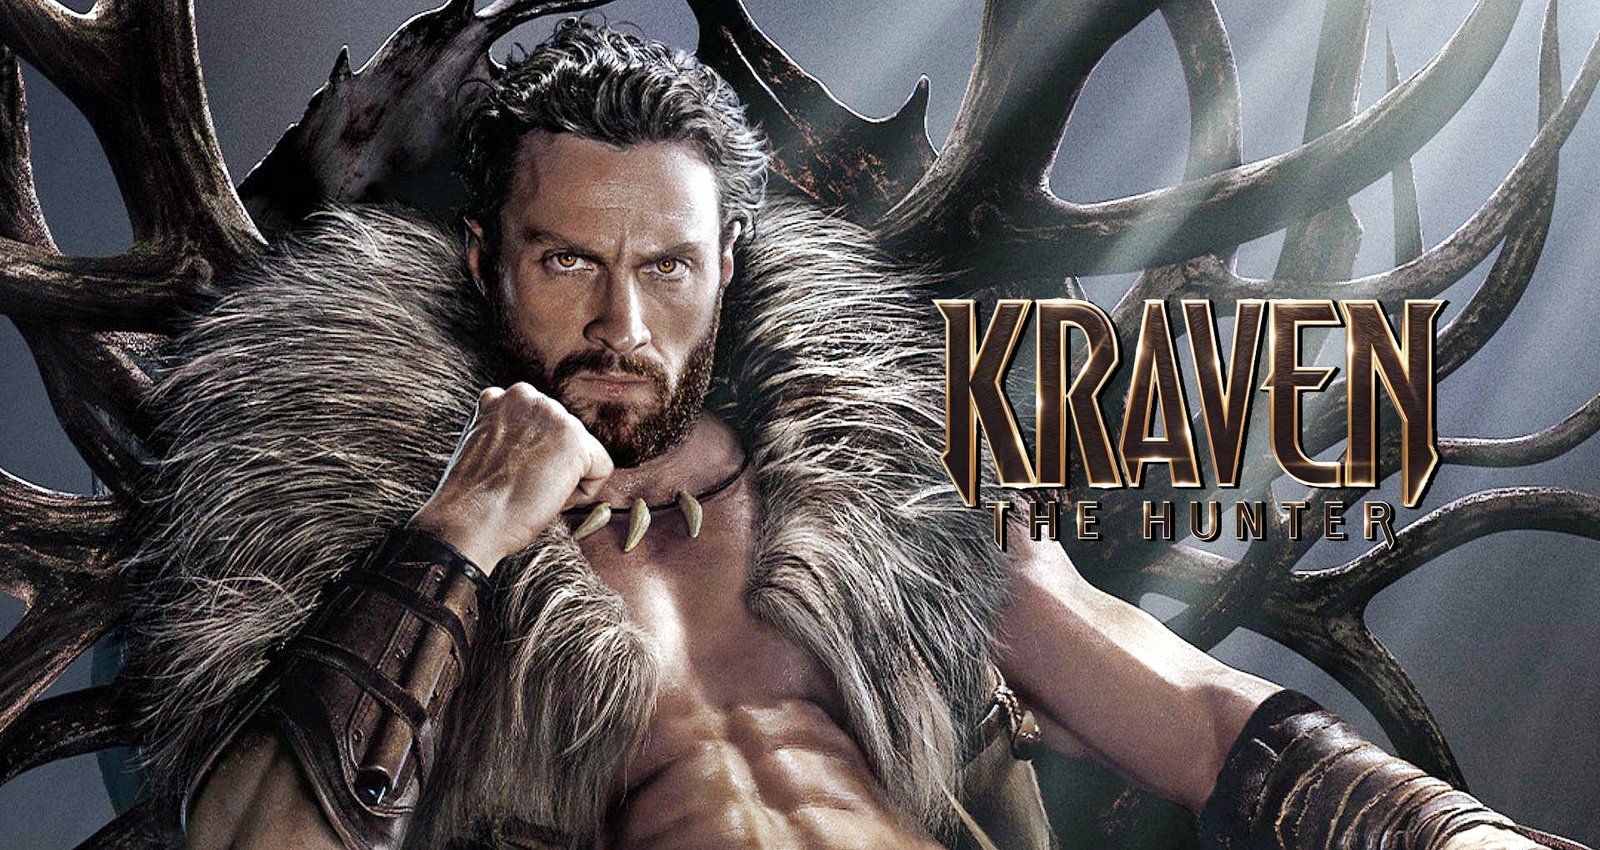 Kraven - O Caçador | Trailer com Aaron Taylor-Johnson como Kraven divulgado pela Sony Pictures